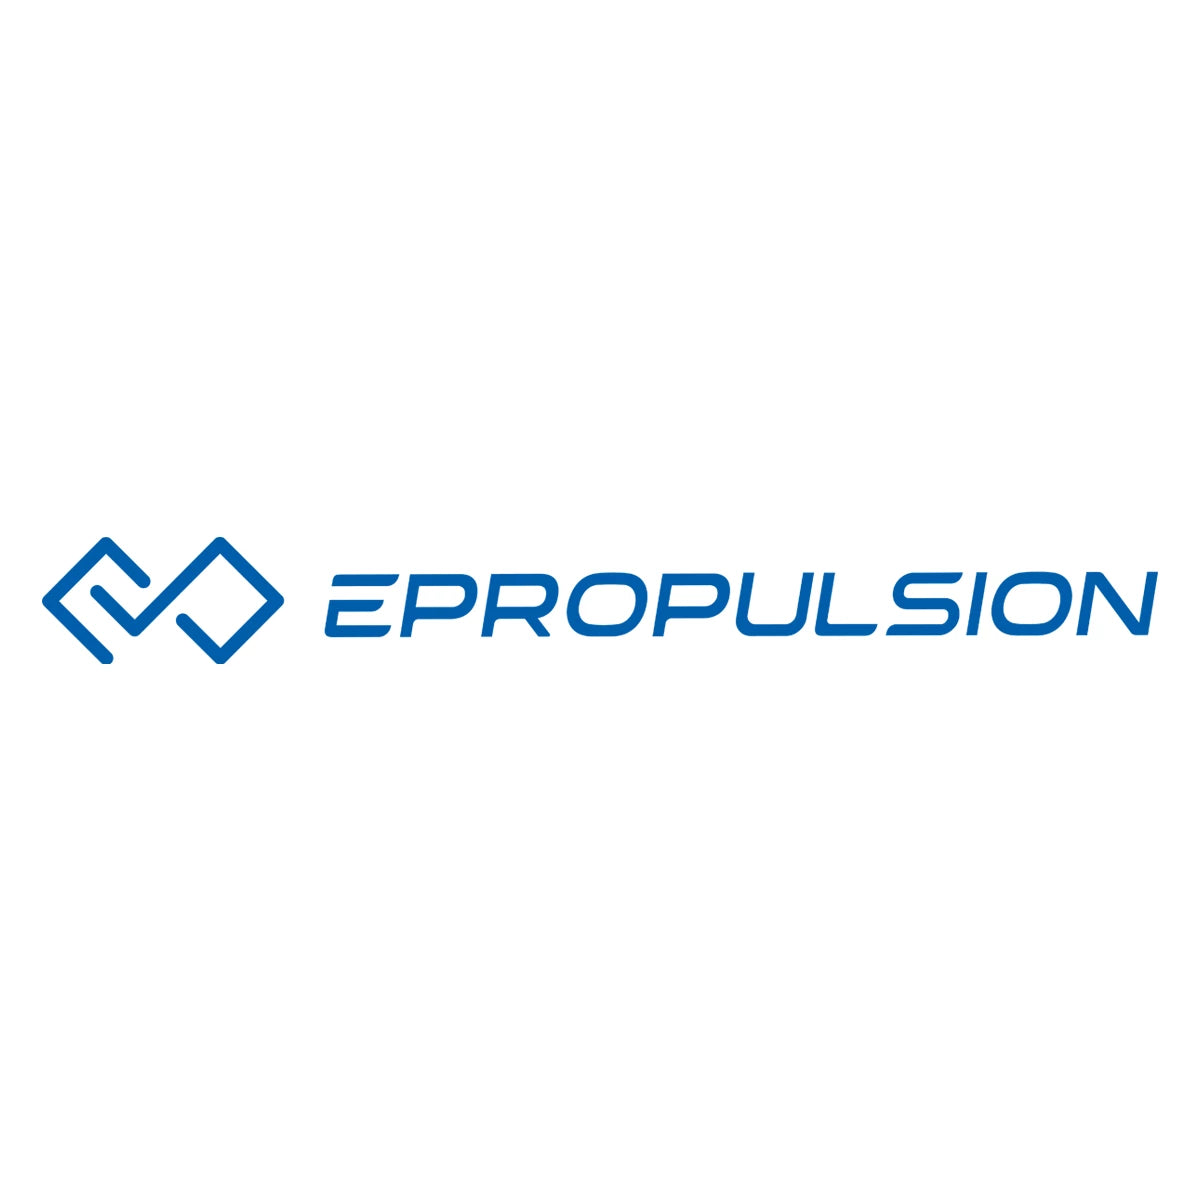 ePropulsion